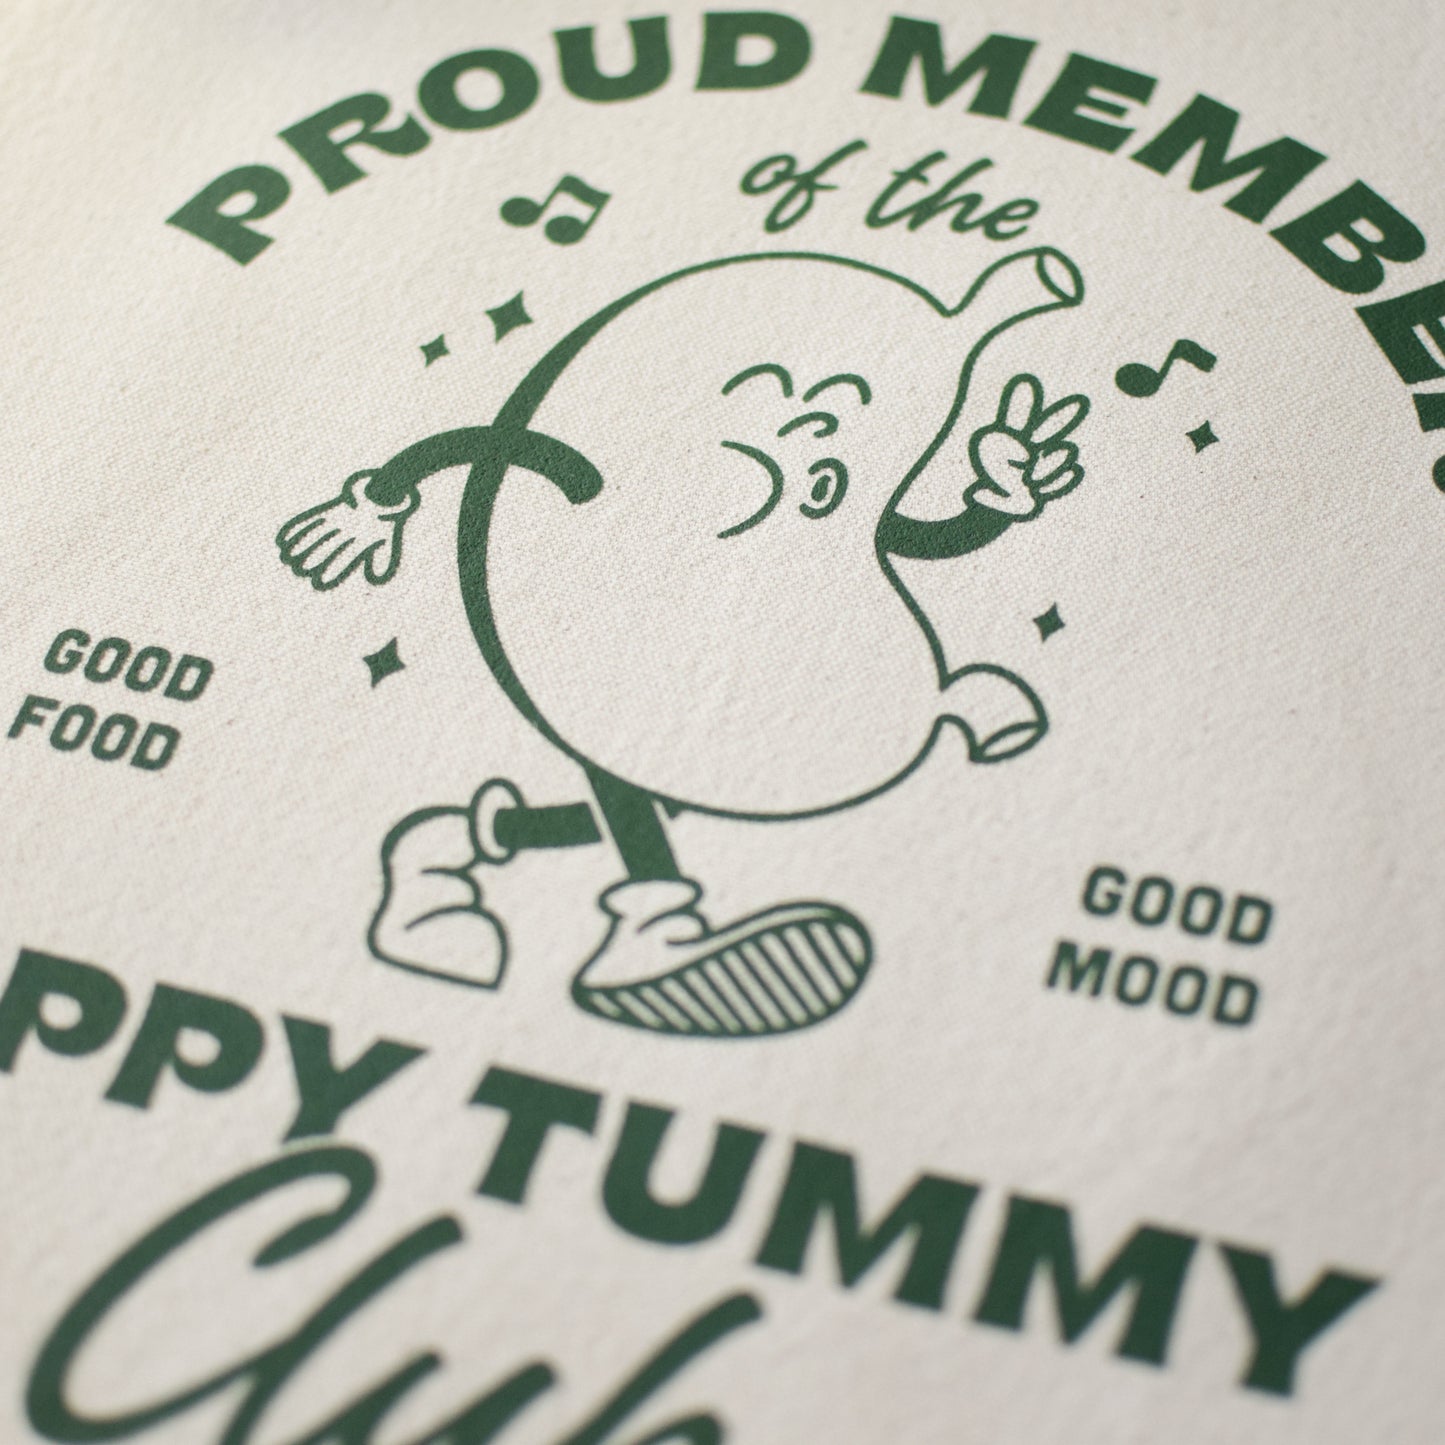 Happy Tummy Club Tote Bag